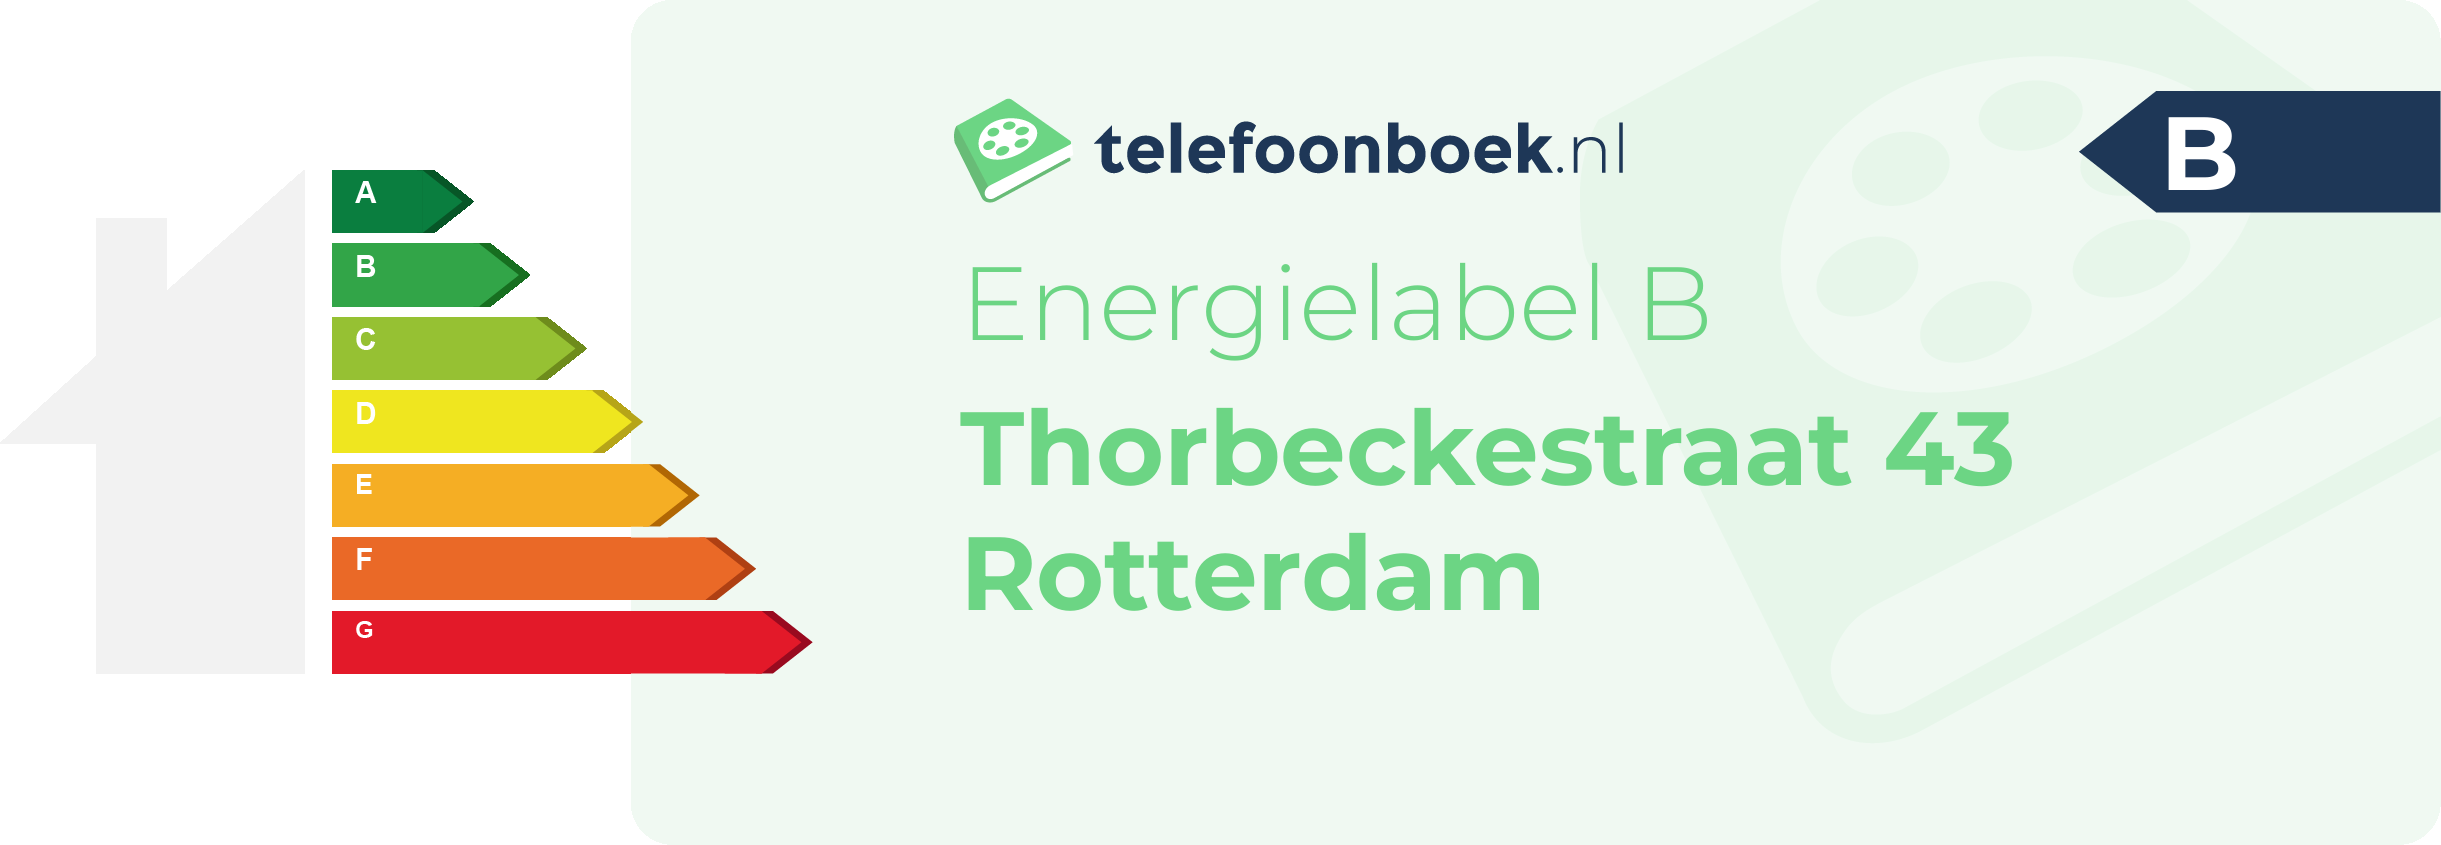 Energielabel Thorbeckestraat 43 Rotterdam